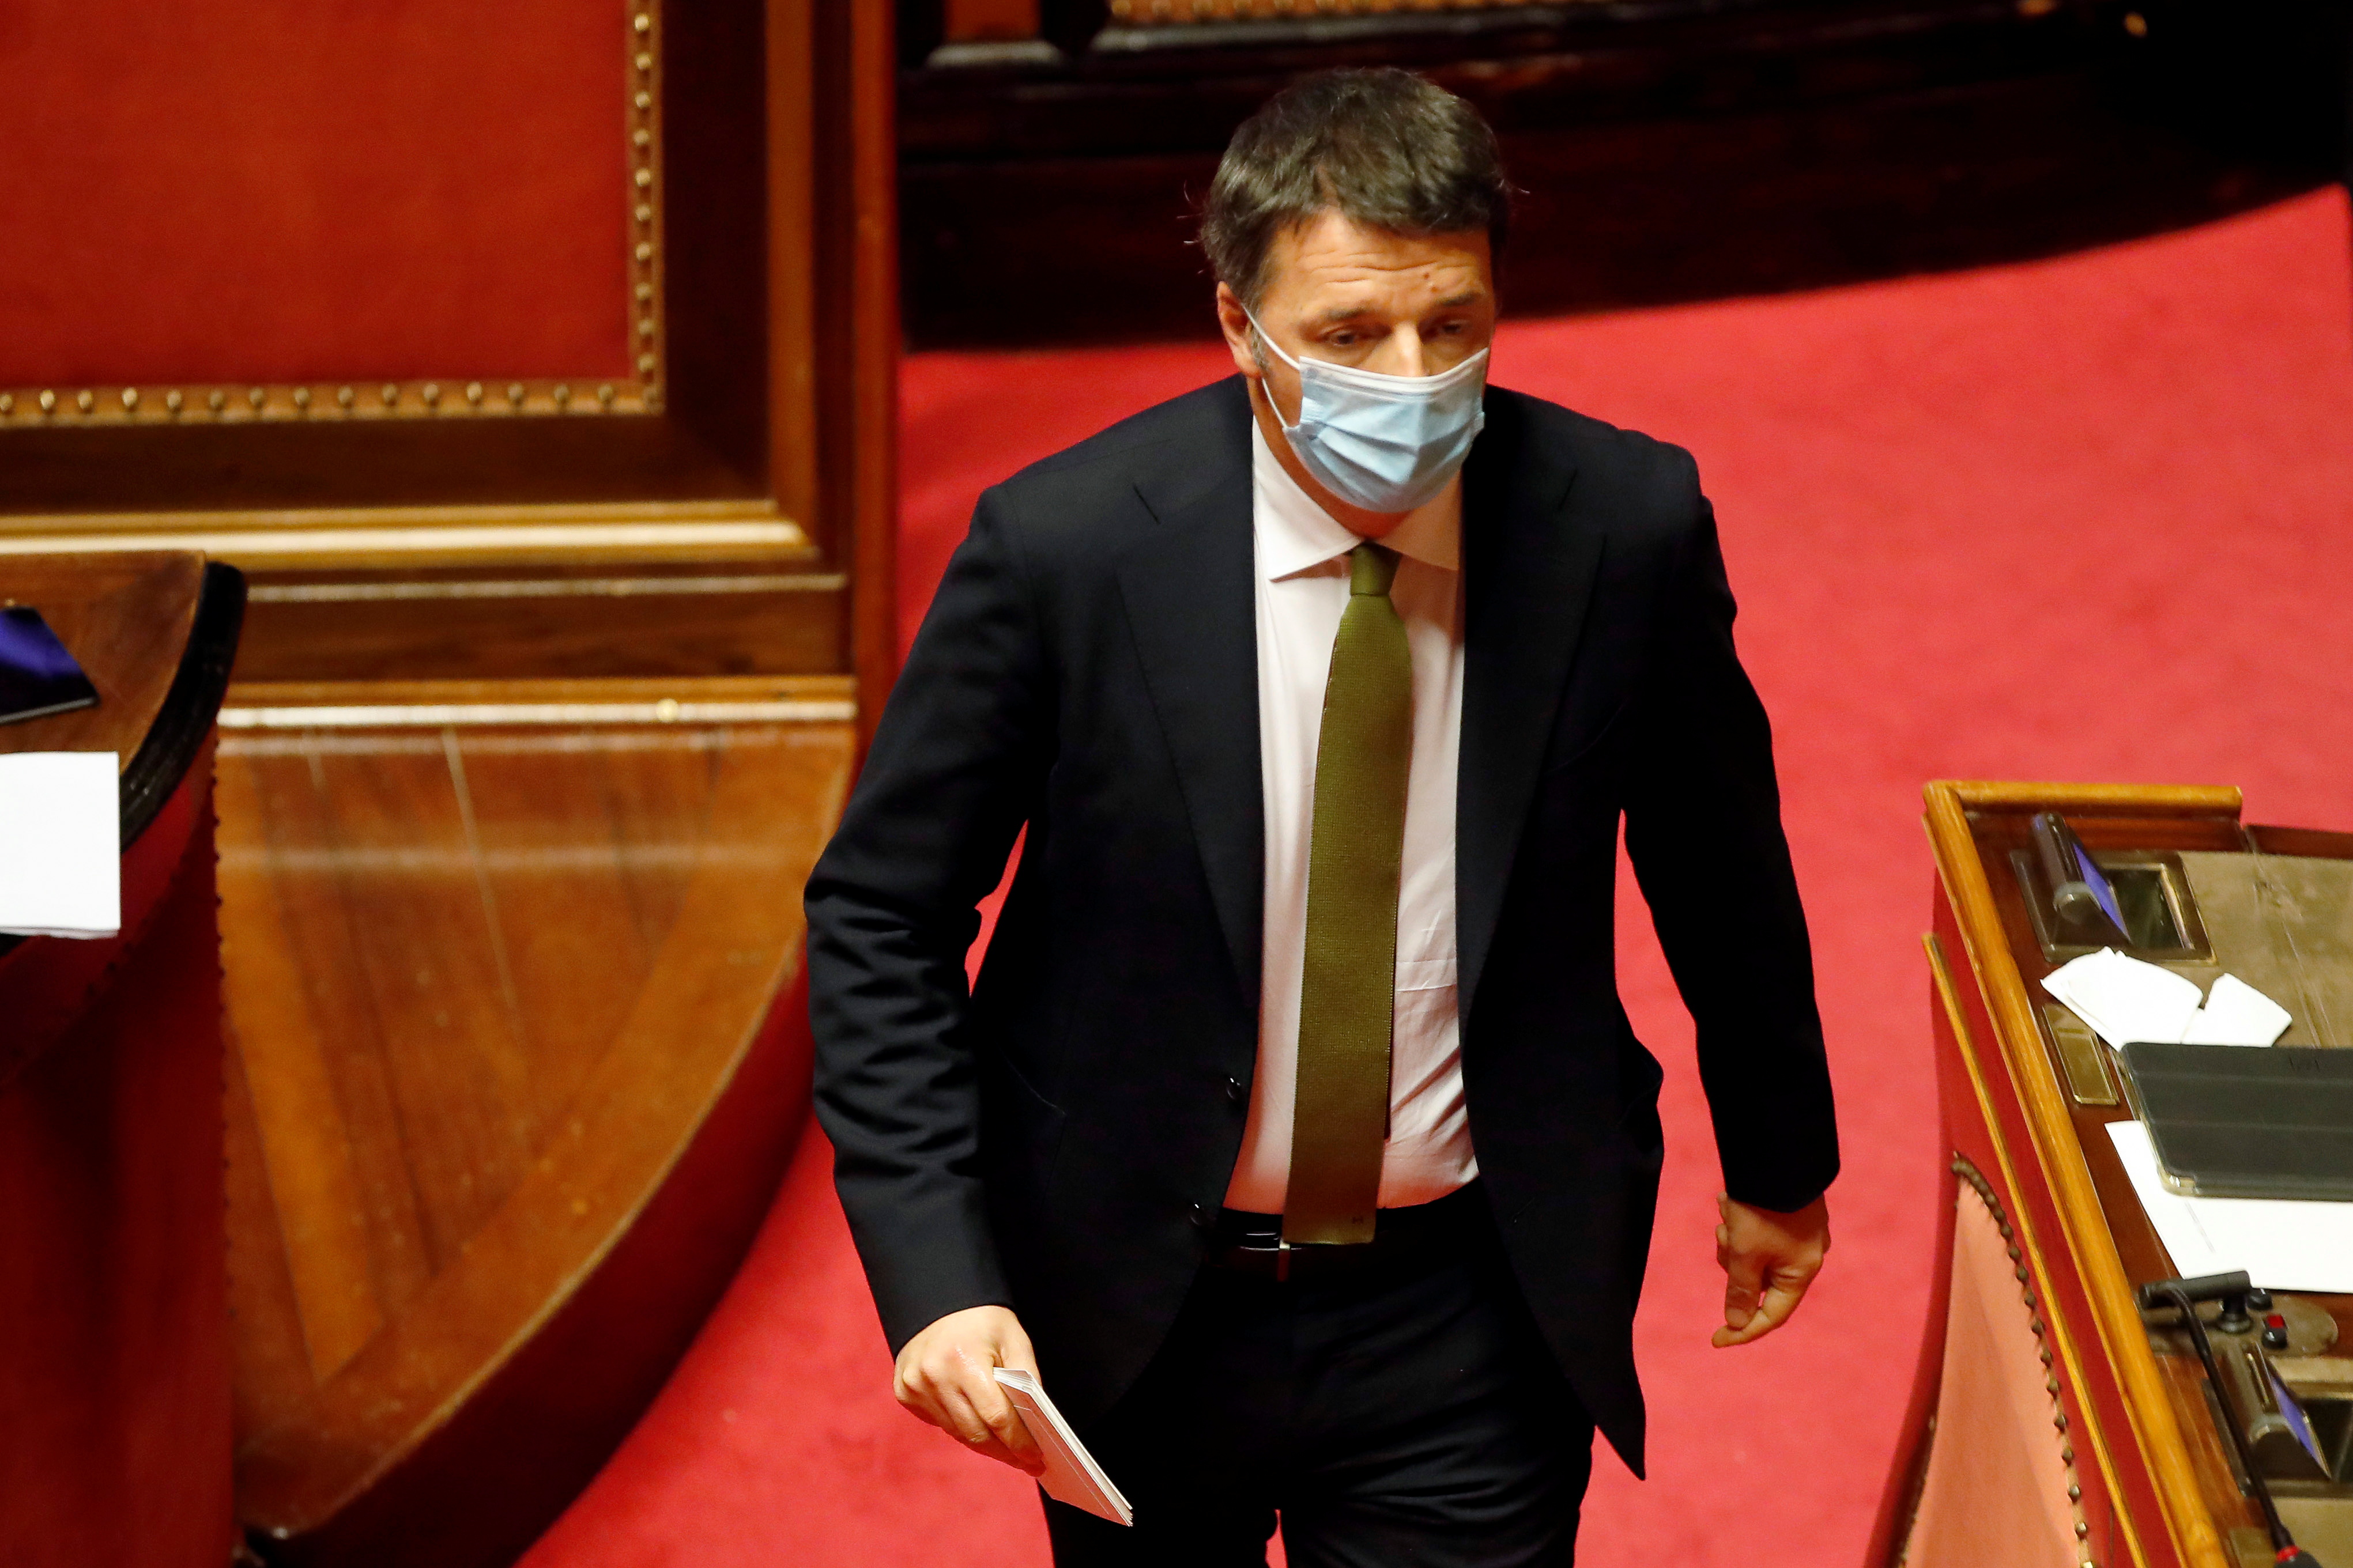 El ex primer ministro italiano Matteo Renzi. Foto: Alessandra Tarantino/via REUTERS